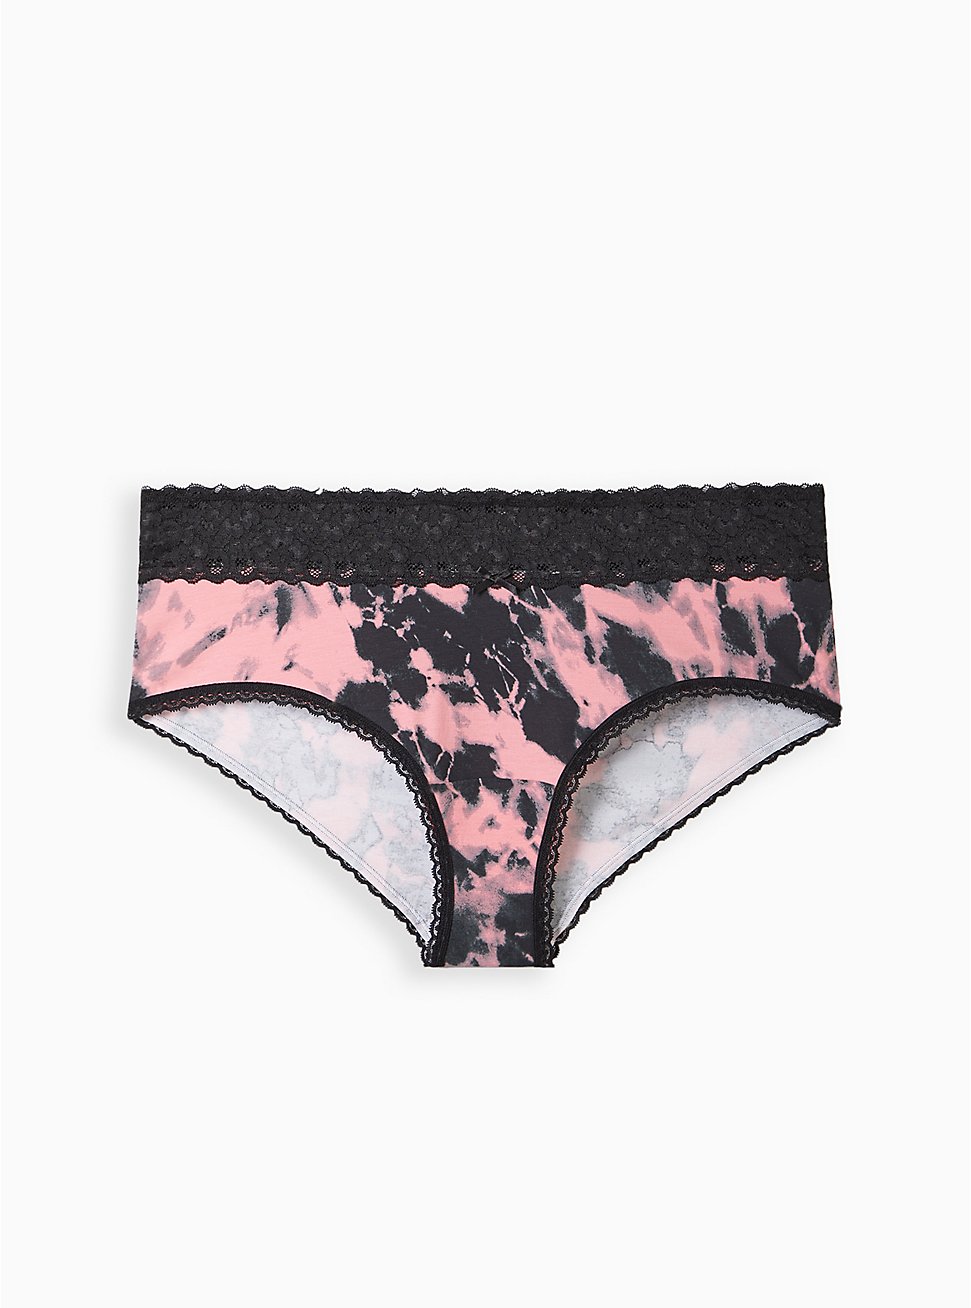 Wide Lace Trim Cheeky Panty - Cotton Tie-Dye Pink & Black, BLEACHED TIE DYE: BLACK, hi-res